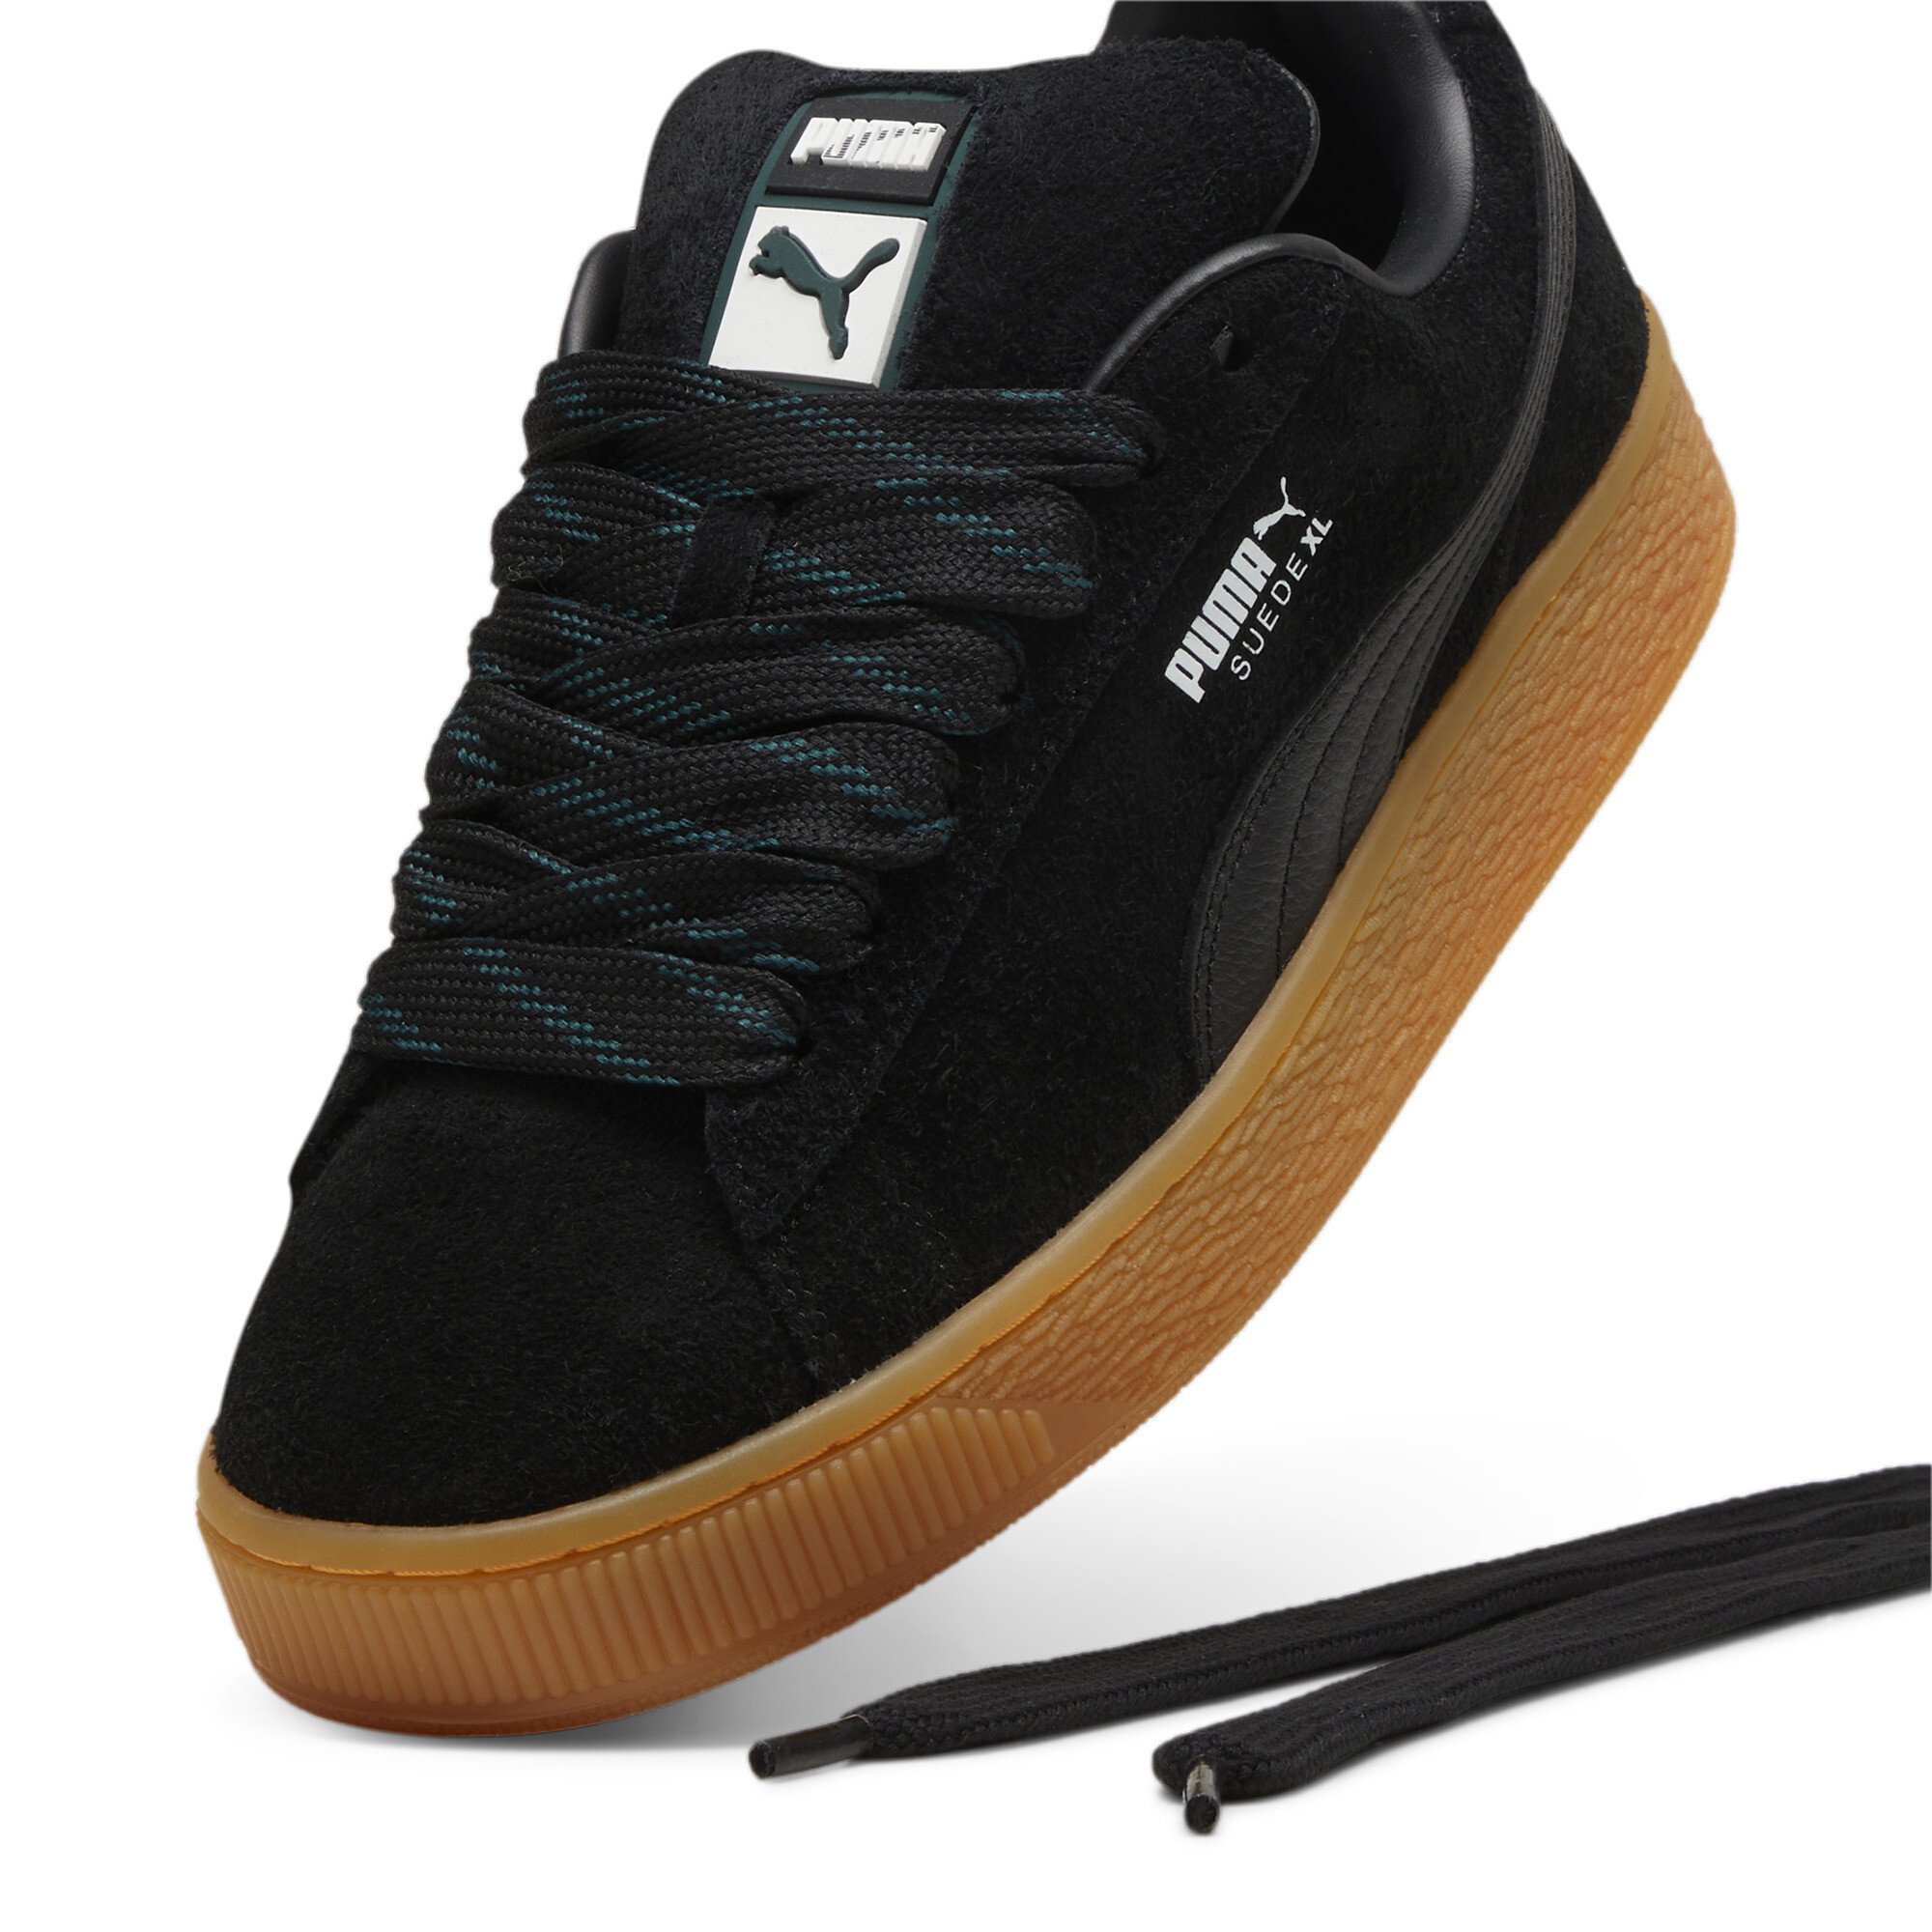 Puma Suede XL Flecked Unisex, Black, Size 39, Shoes